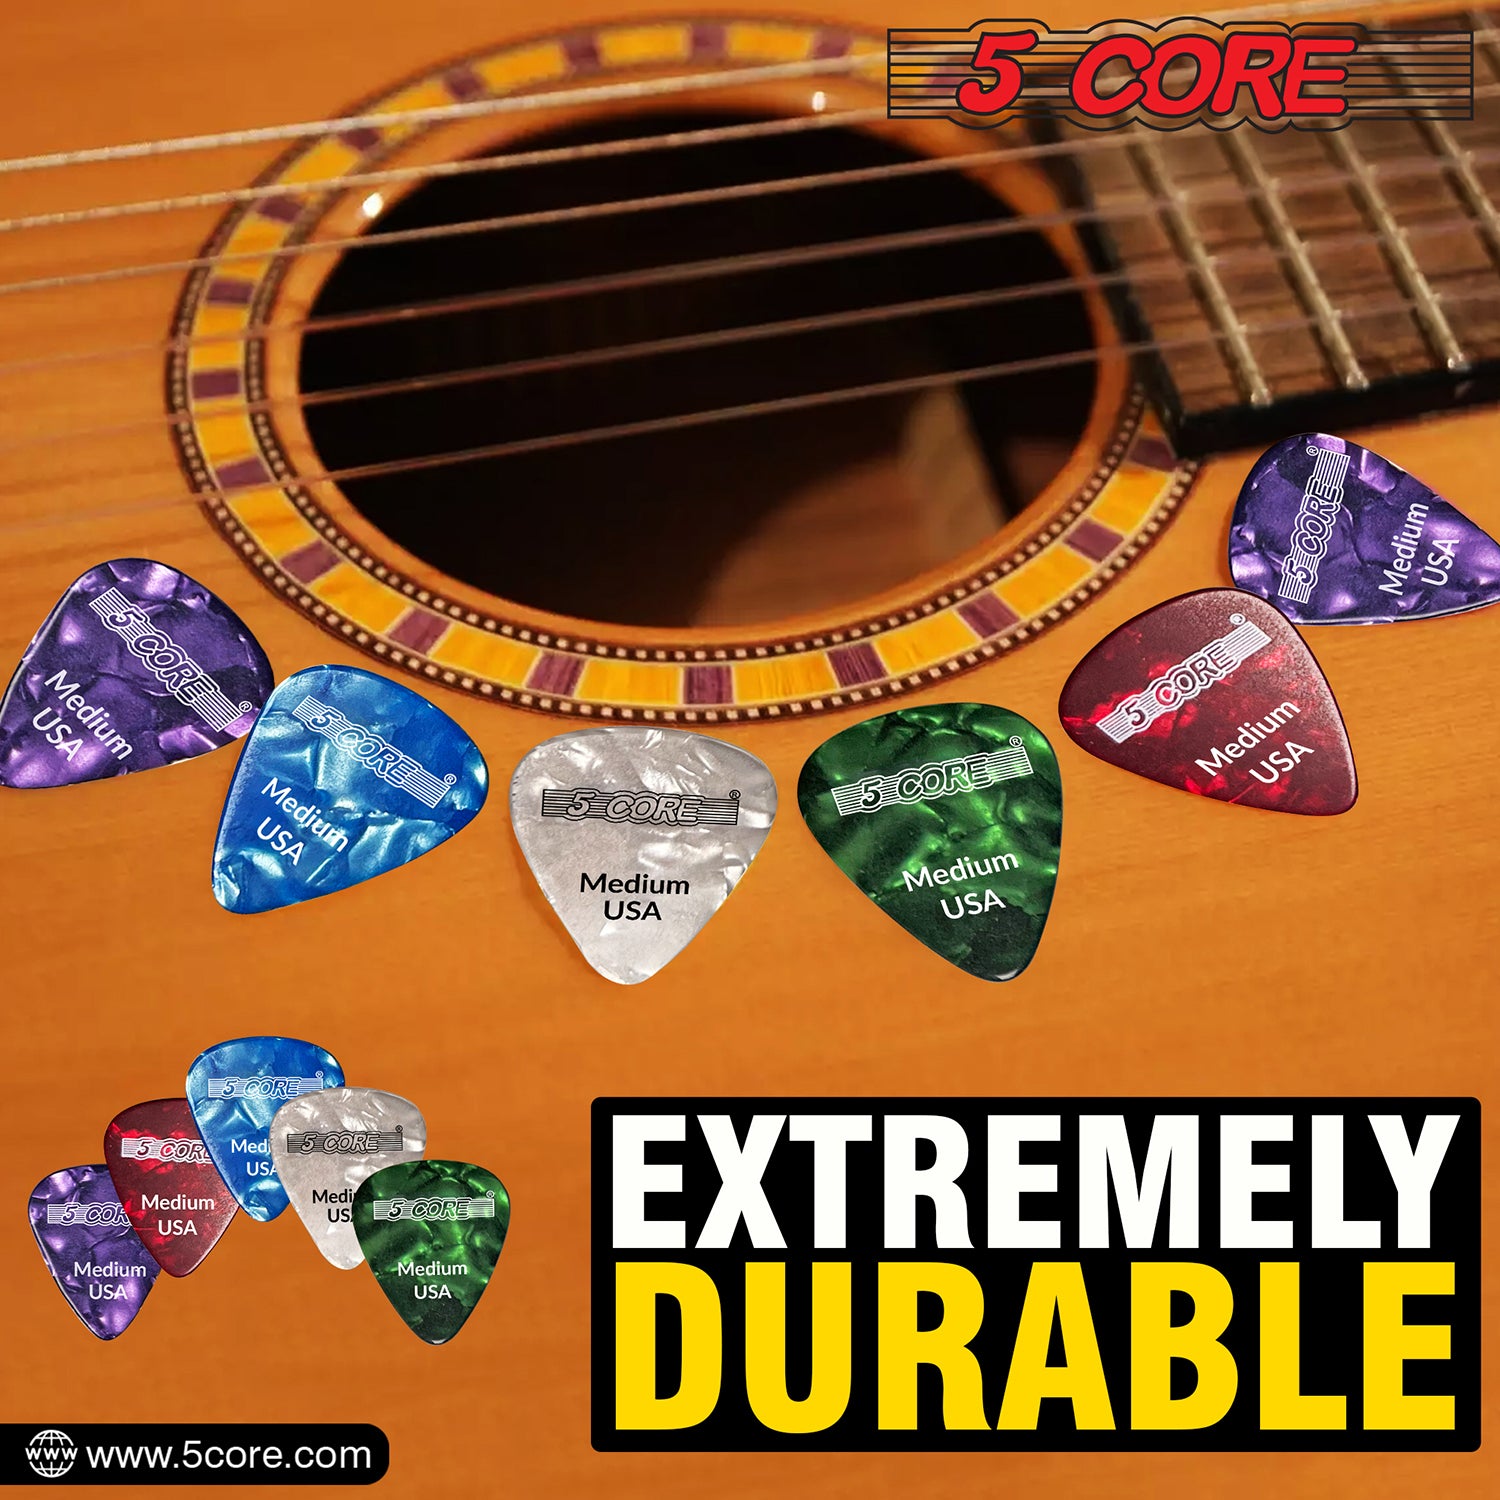 5 Core Celluloid Guitar Pick 12Pack White Medium Gauge Plectrums for Acoustic Electric Bass Guitar